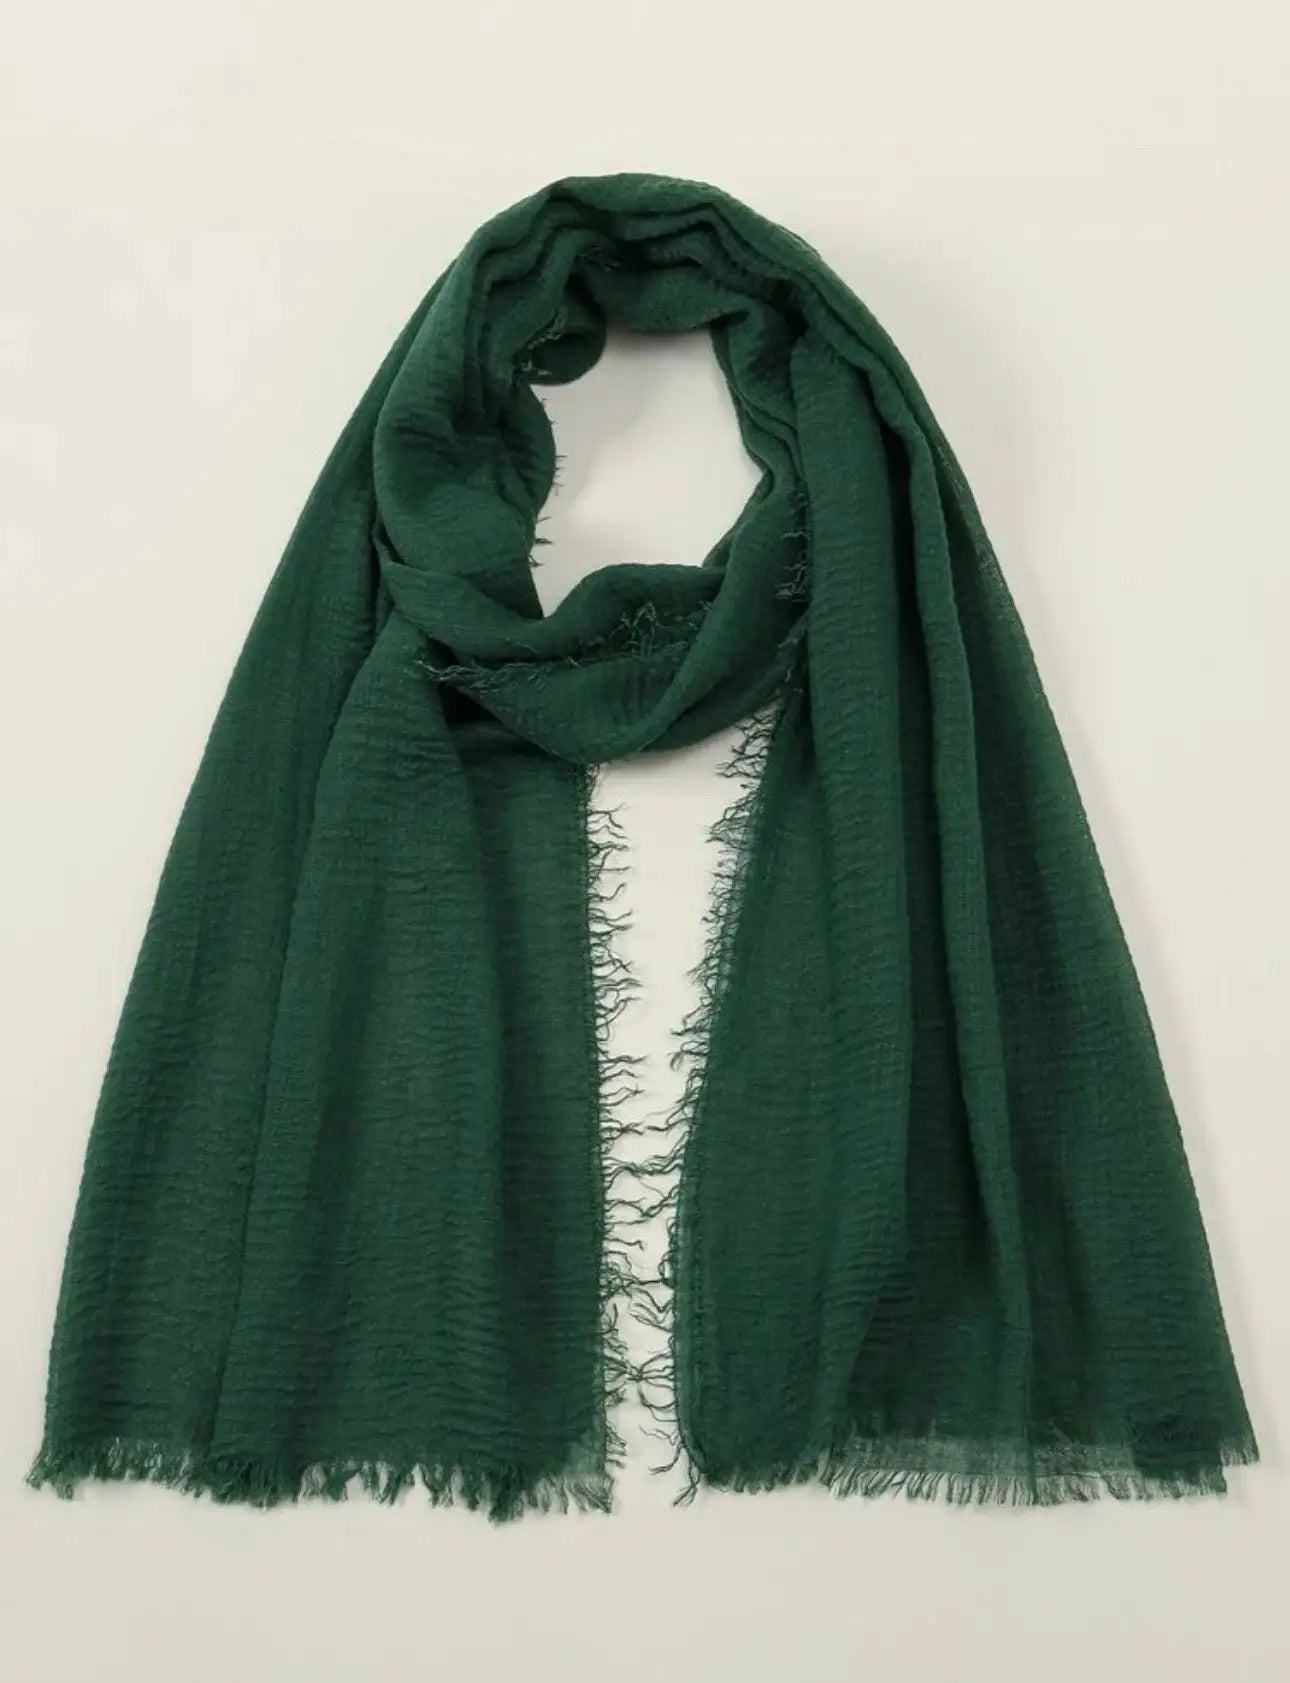 Premium Light Green Cotton Hijab - Cotton Scarf (Emerald Green) - Ayesha’s Collection